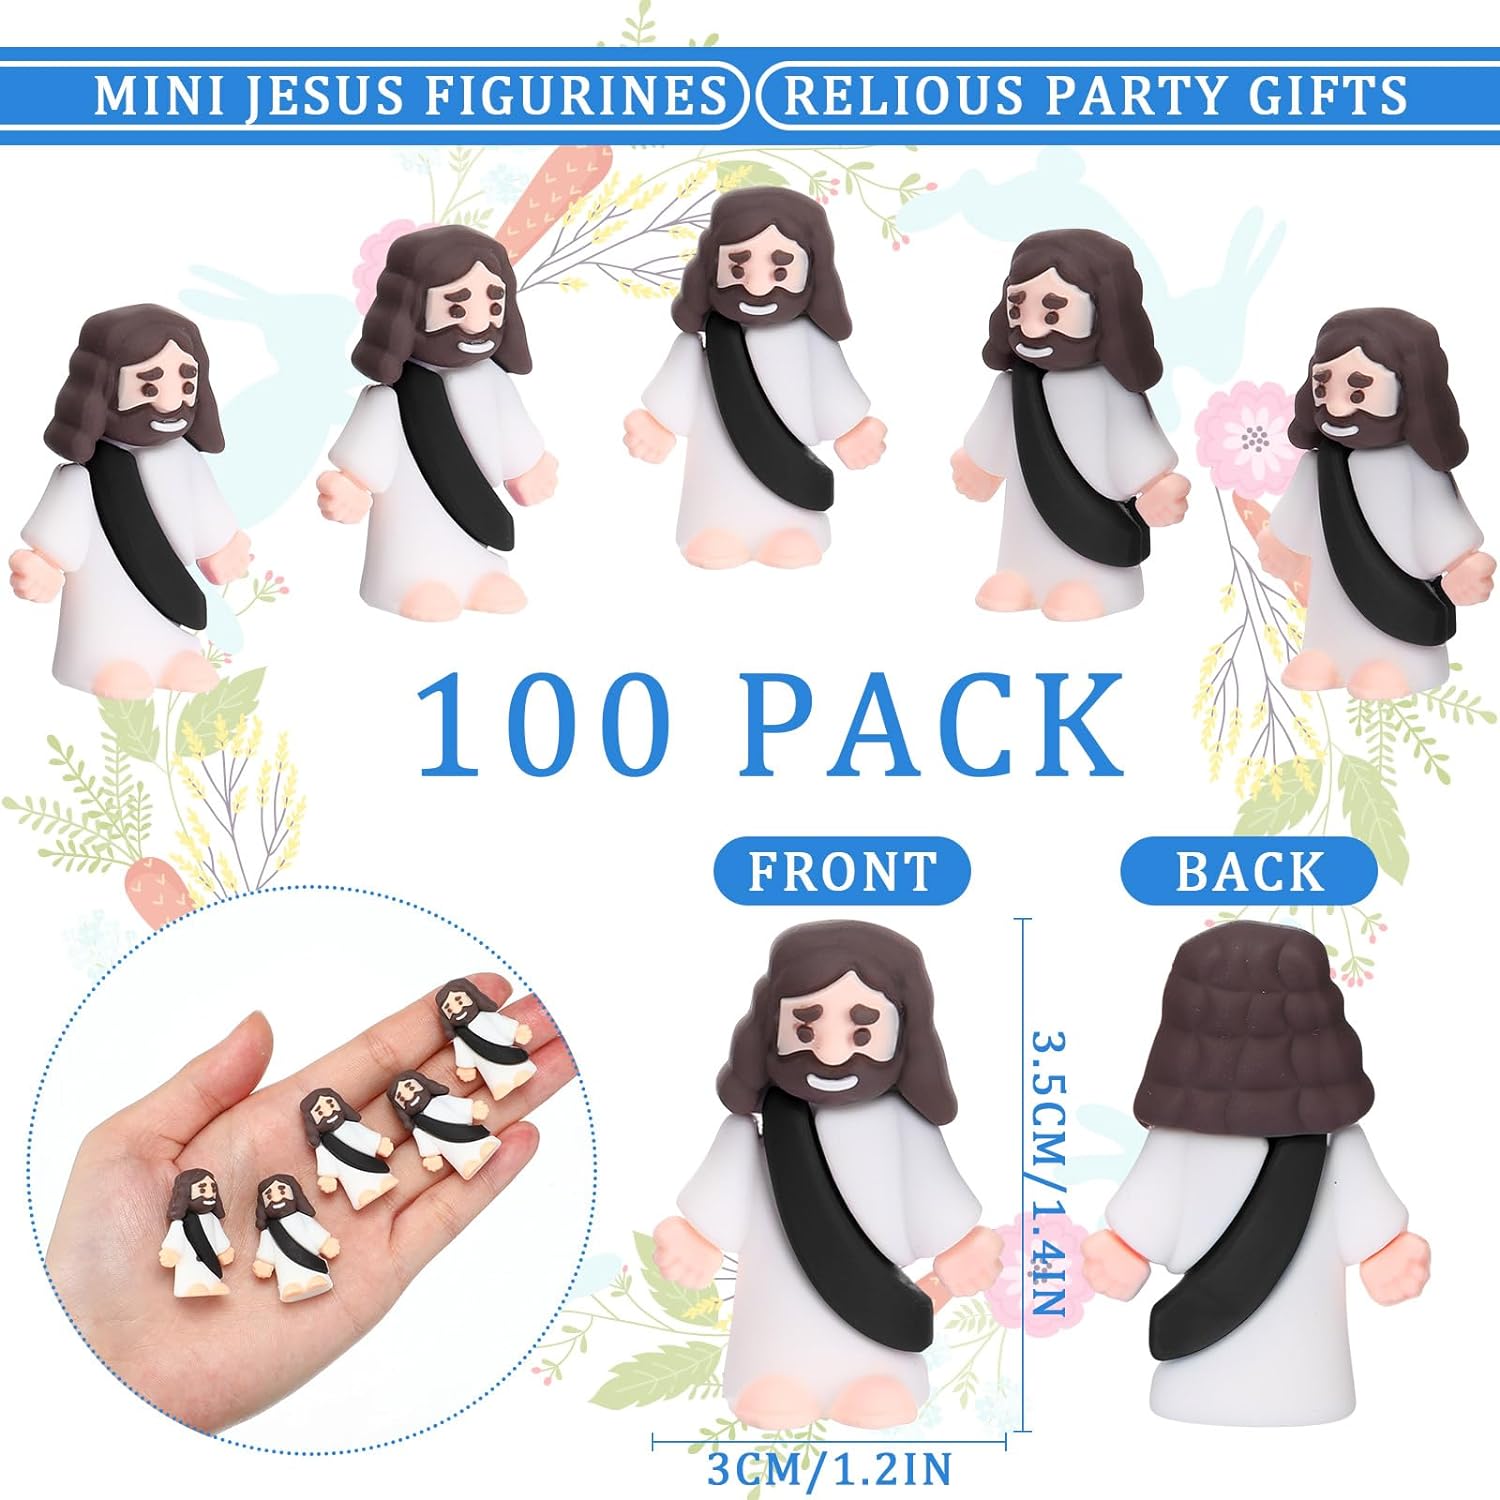 100 Pack Mini Jesus Figurines Bulk Easter Jesus Figures Toys Religious Miniature Jesus Doll Gifts Christ Savior Jesus